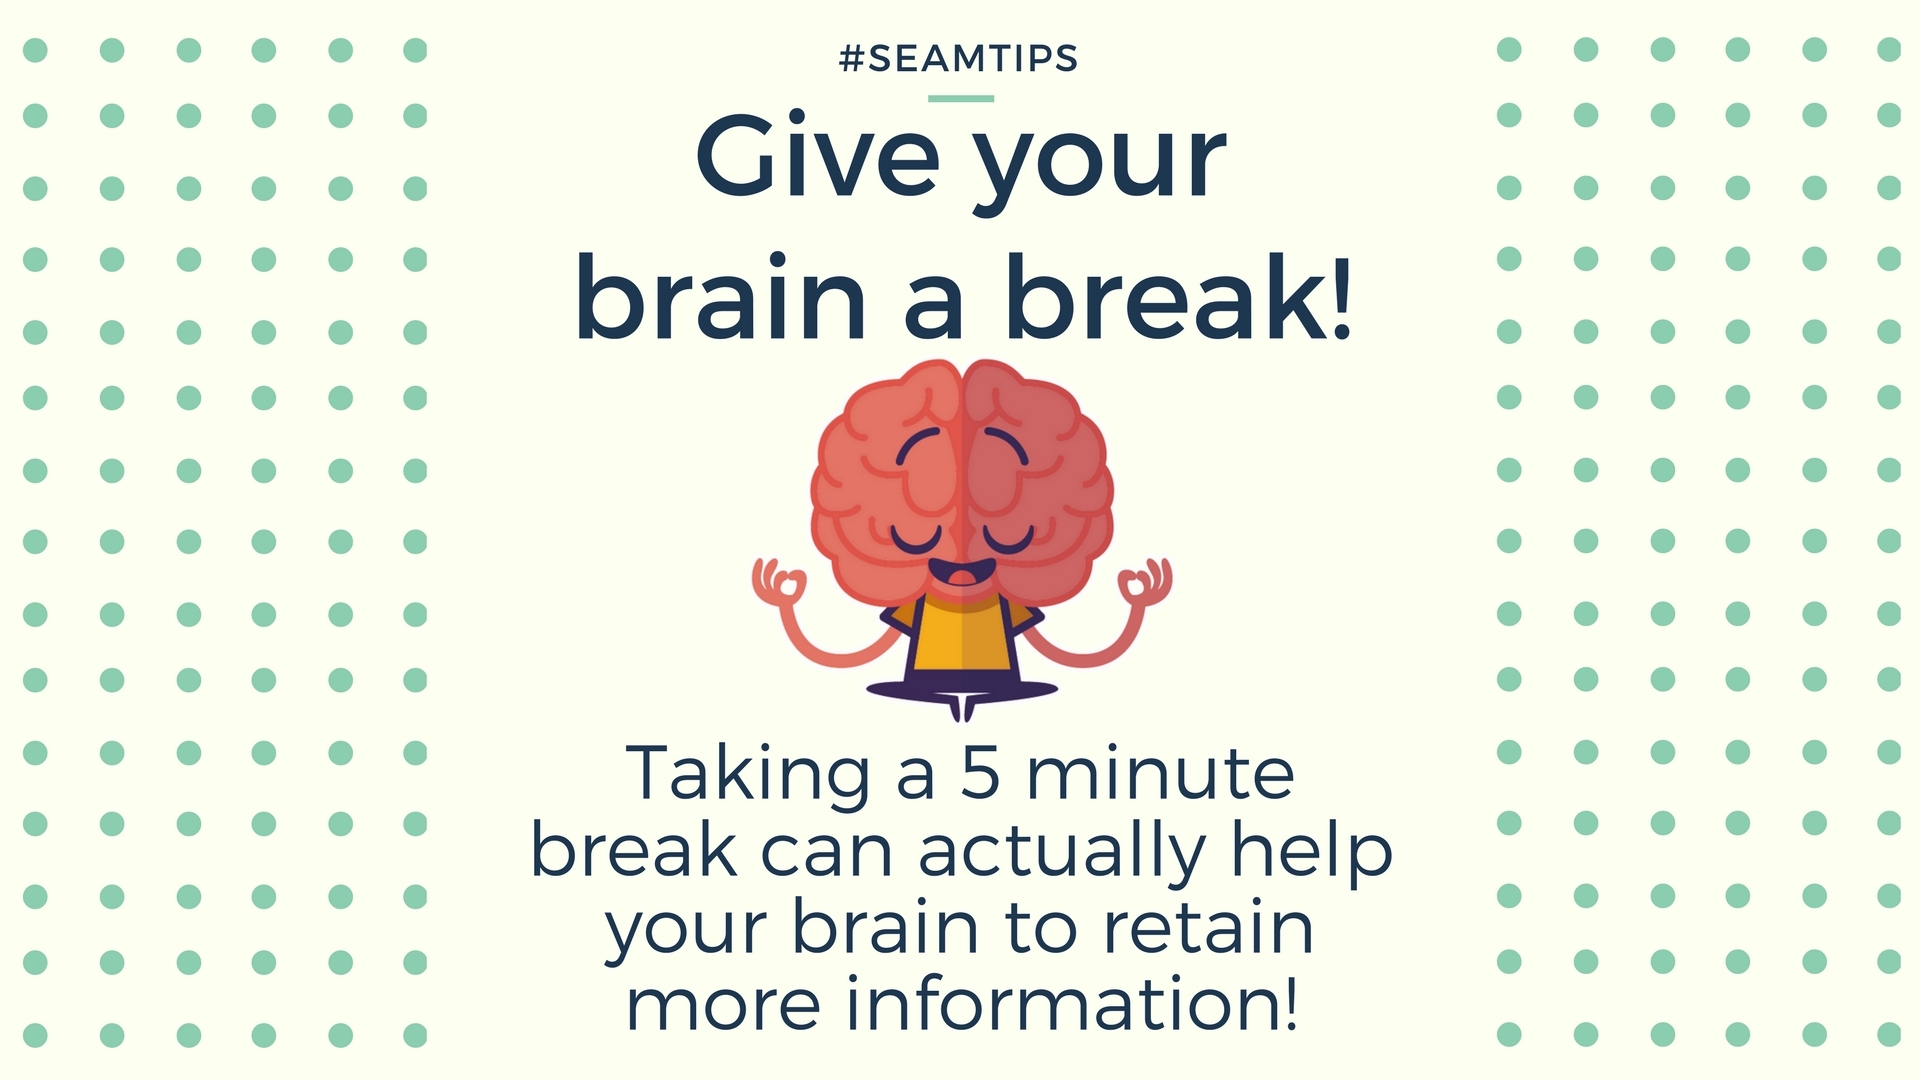 Give your brain a break